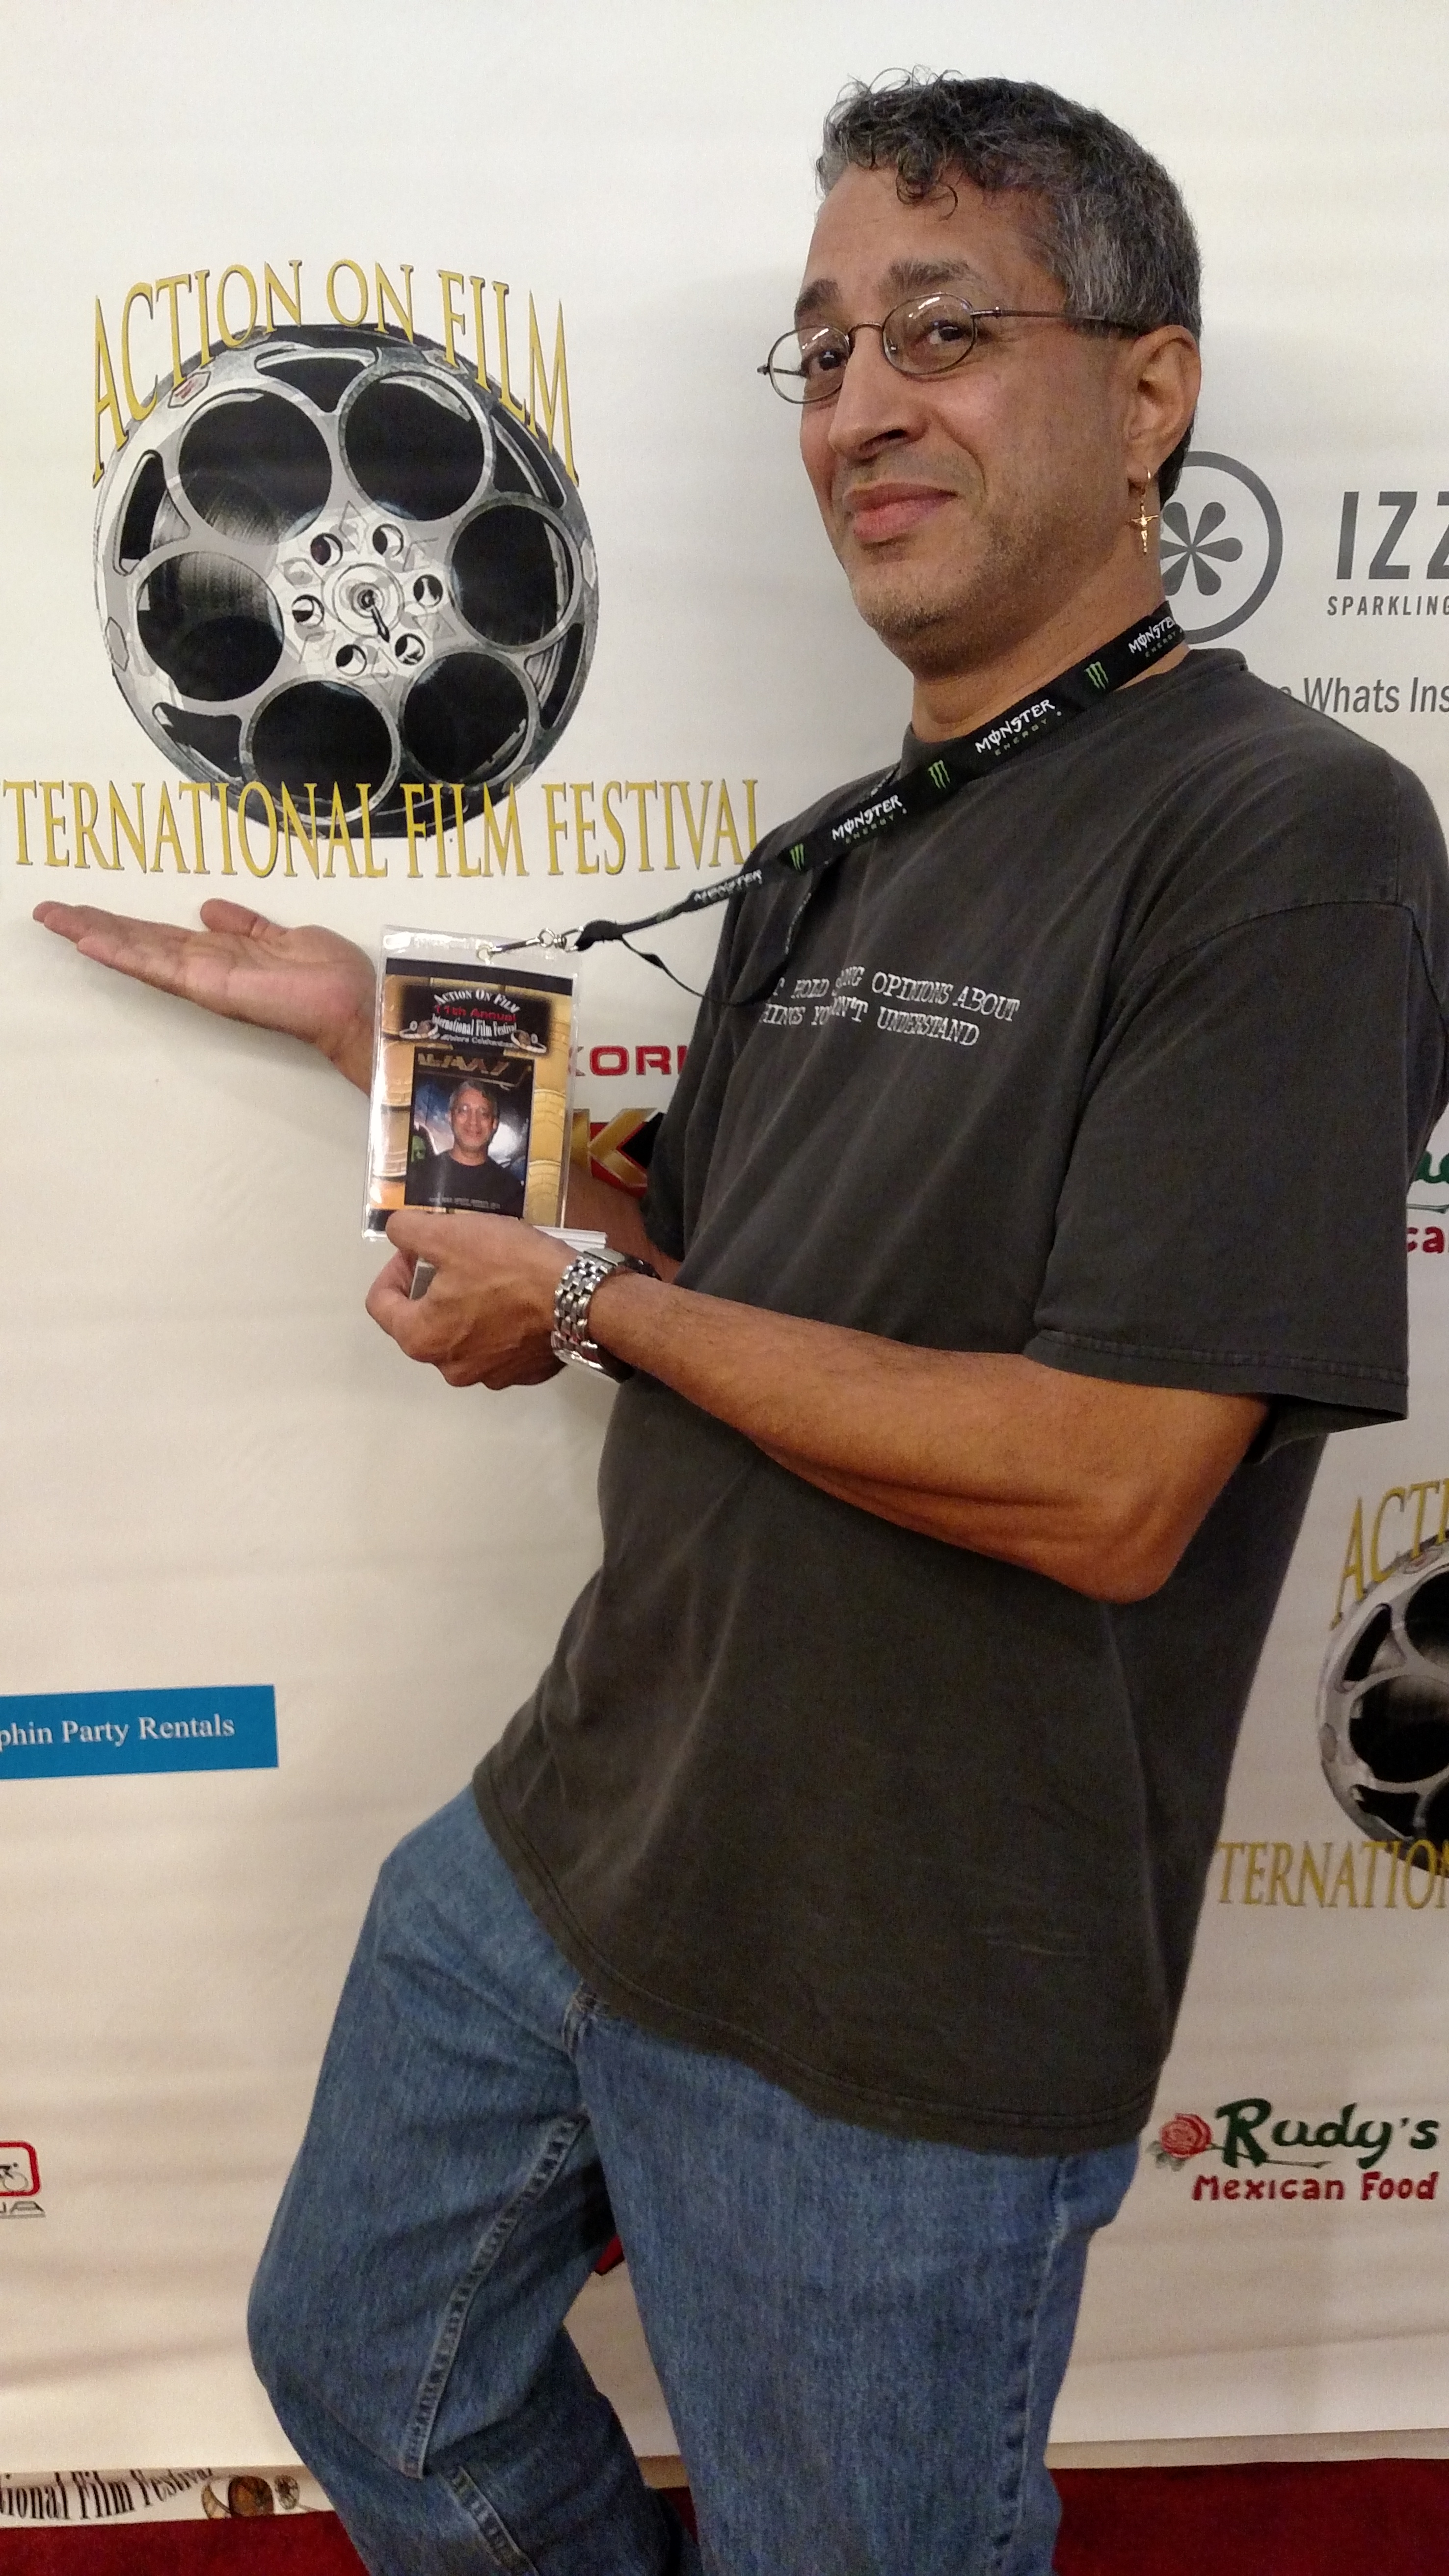 Jax Kearney walking red carpet at 2015 Action on Film Festival, where he won 